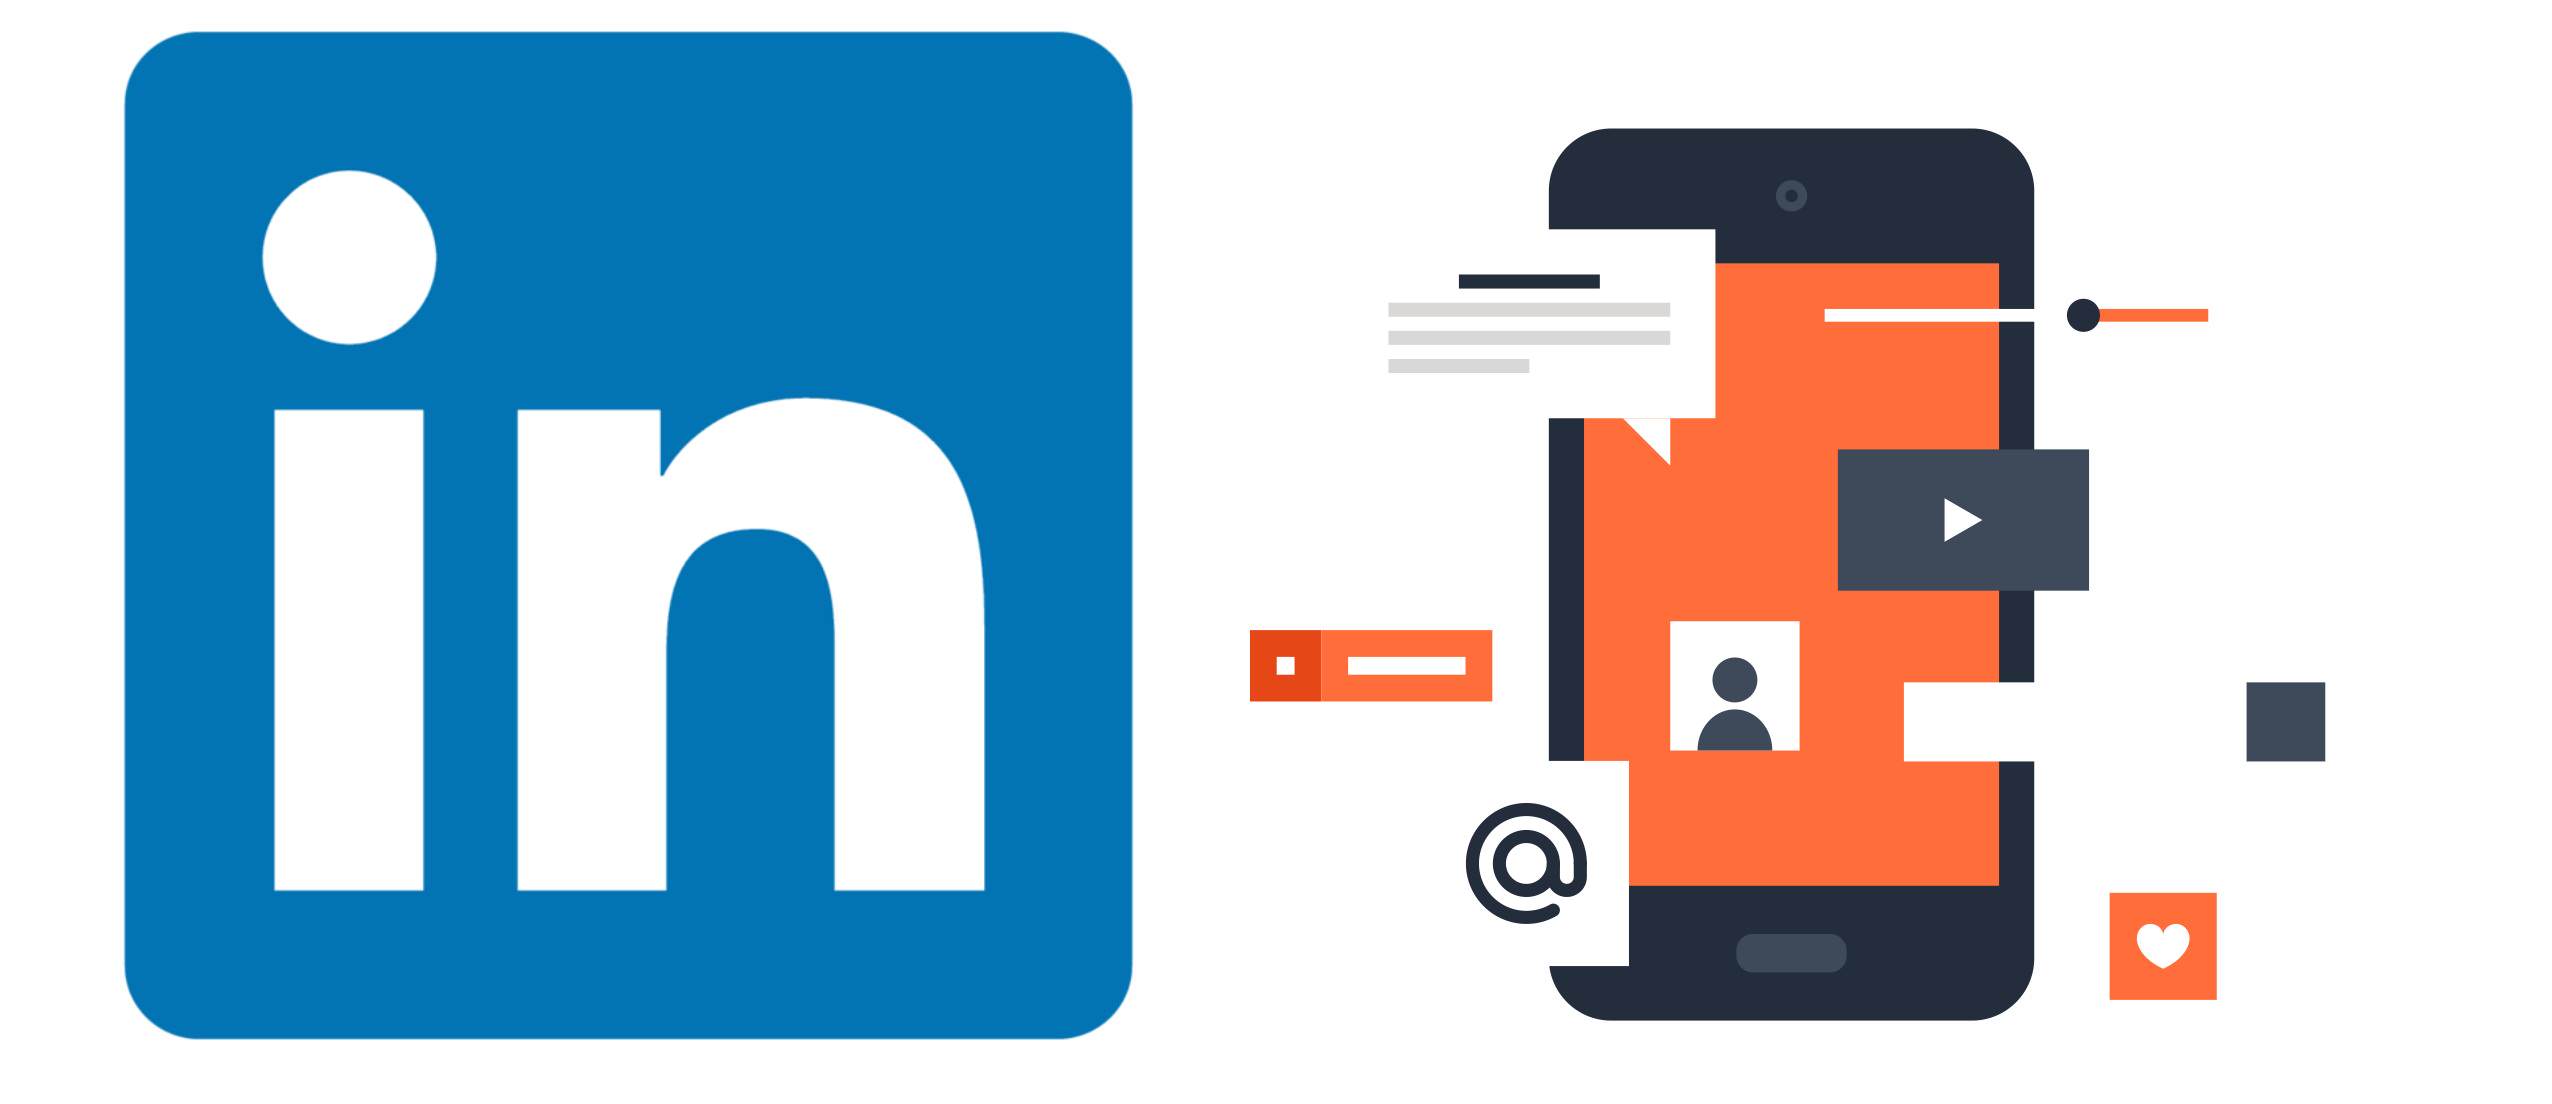 New LinkedIn Logo - New LinkedIn Mobile Interface Falls Flat For Event Professionals ...